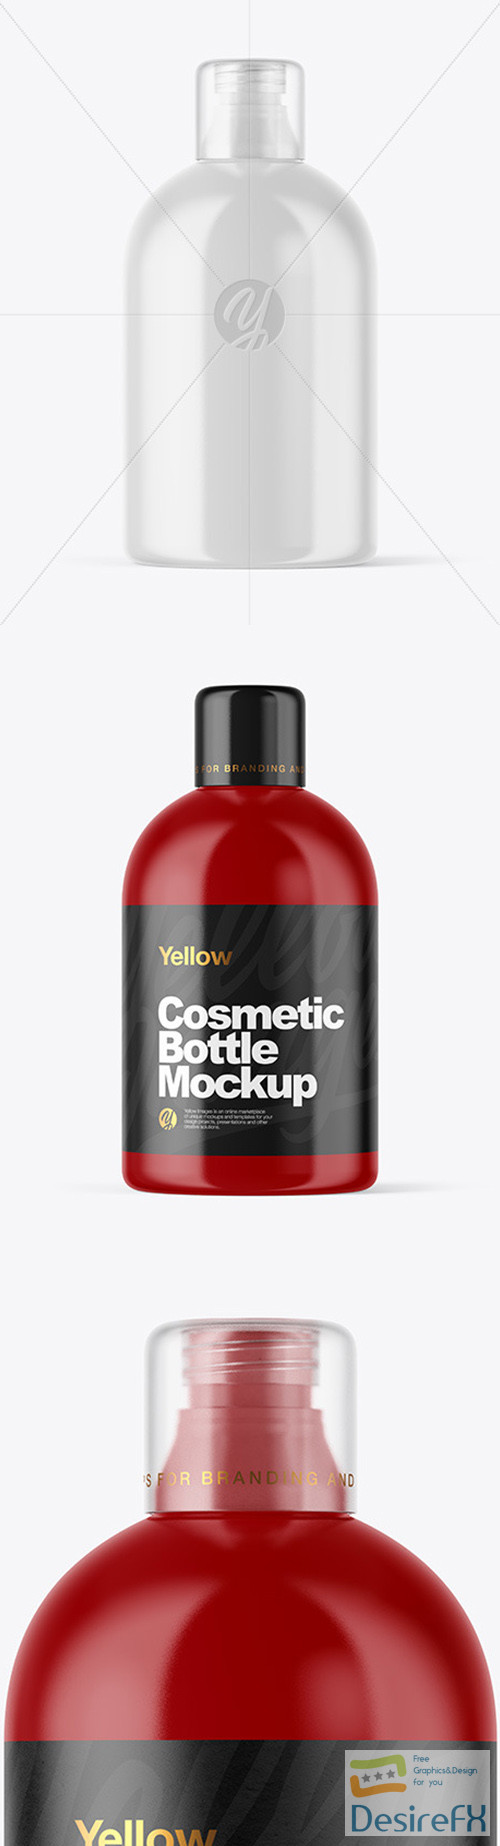 Download Glossy Cosmetic Bottle Mockup 51100 TIF | DesireFX.COM